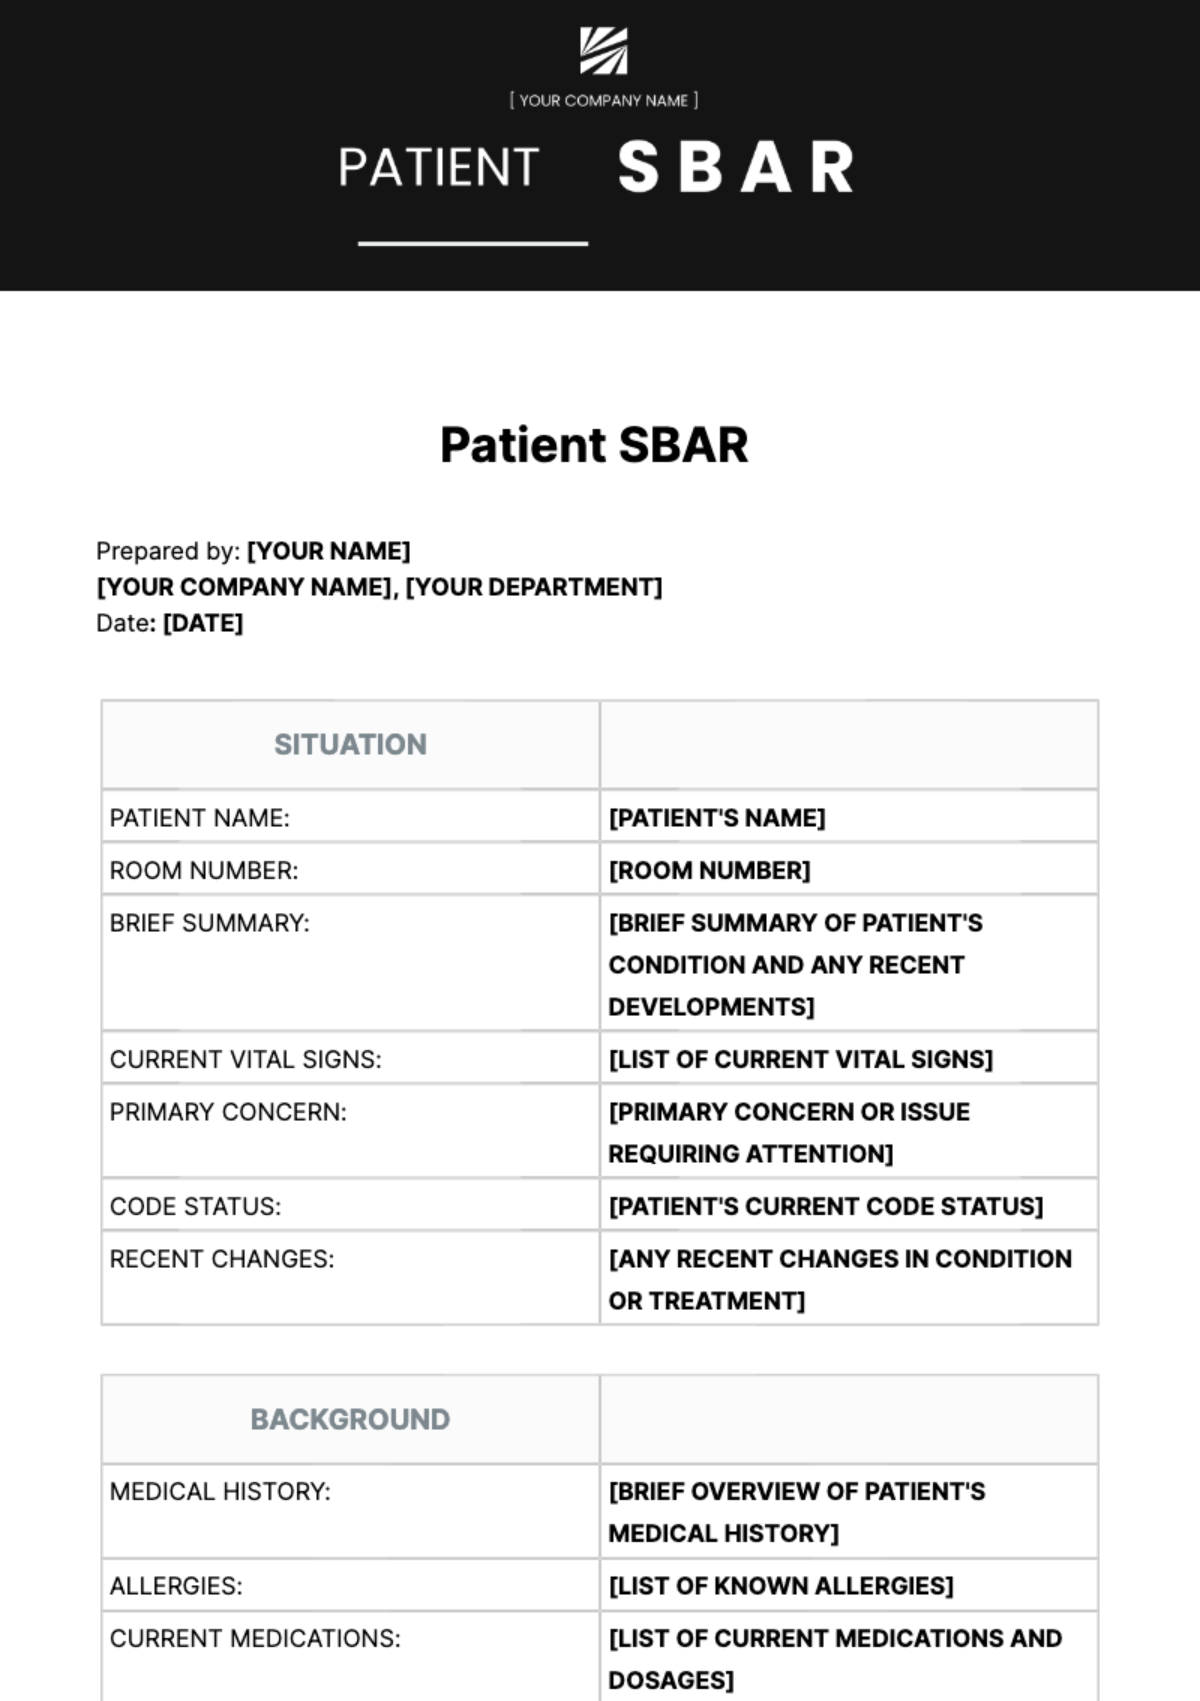 Free Patient SBAR Template